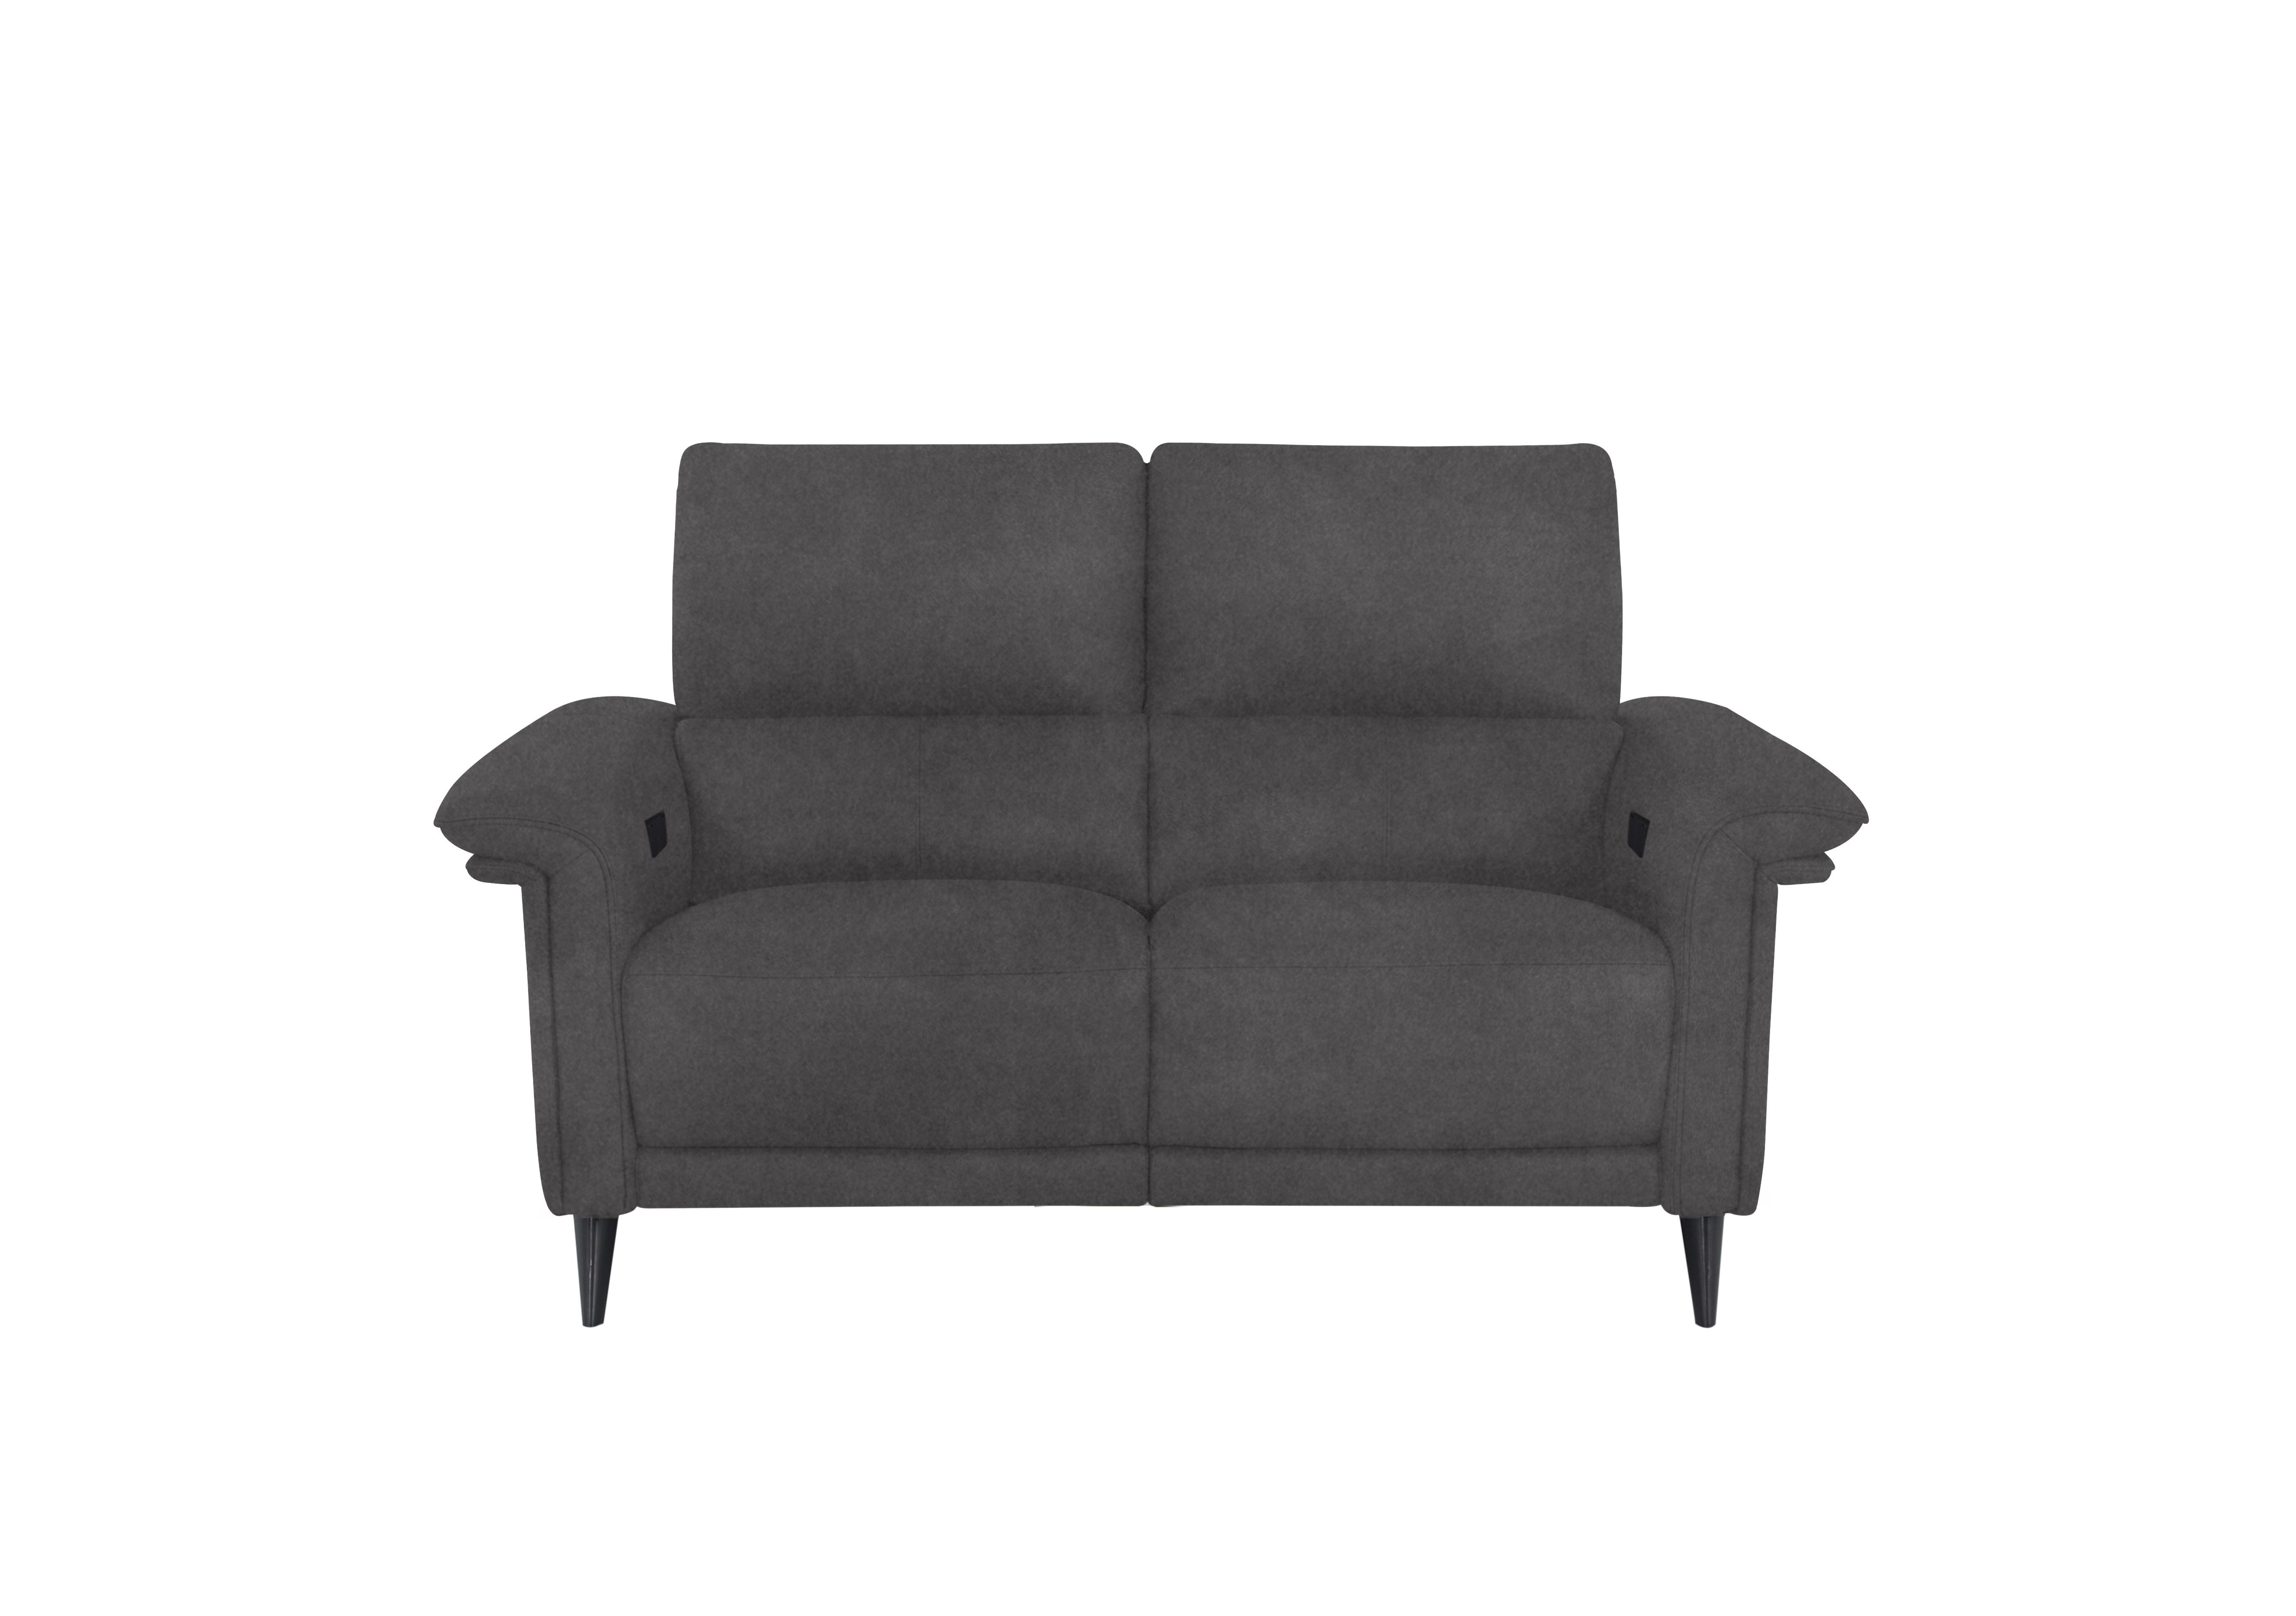 Huxley 2 Seater Fabric Sofa in Fab-Meg-R20 Pewter on Furniture Village